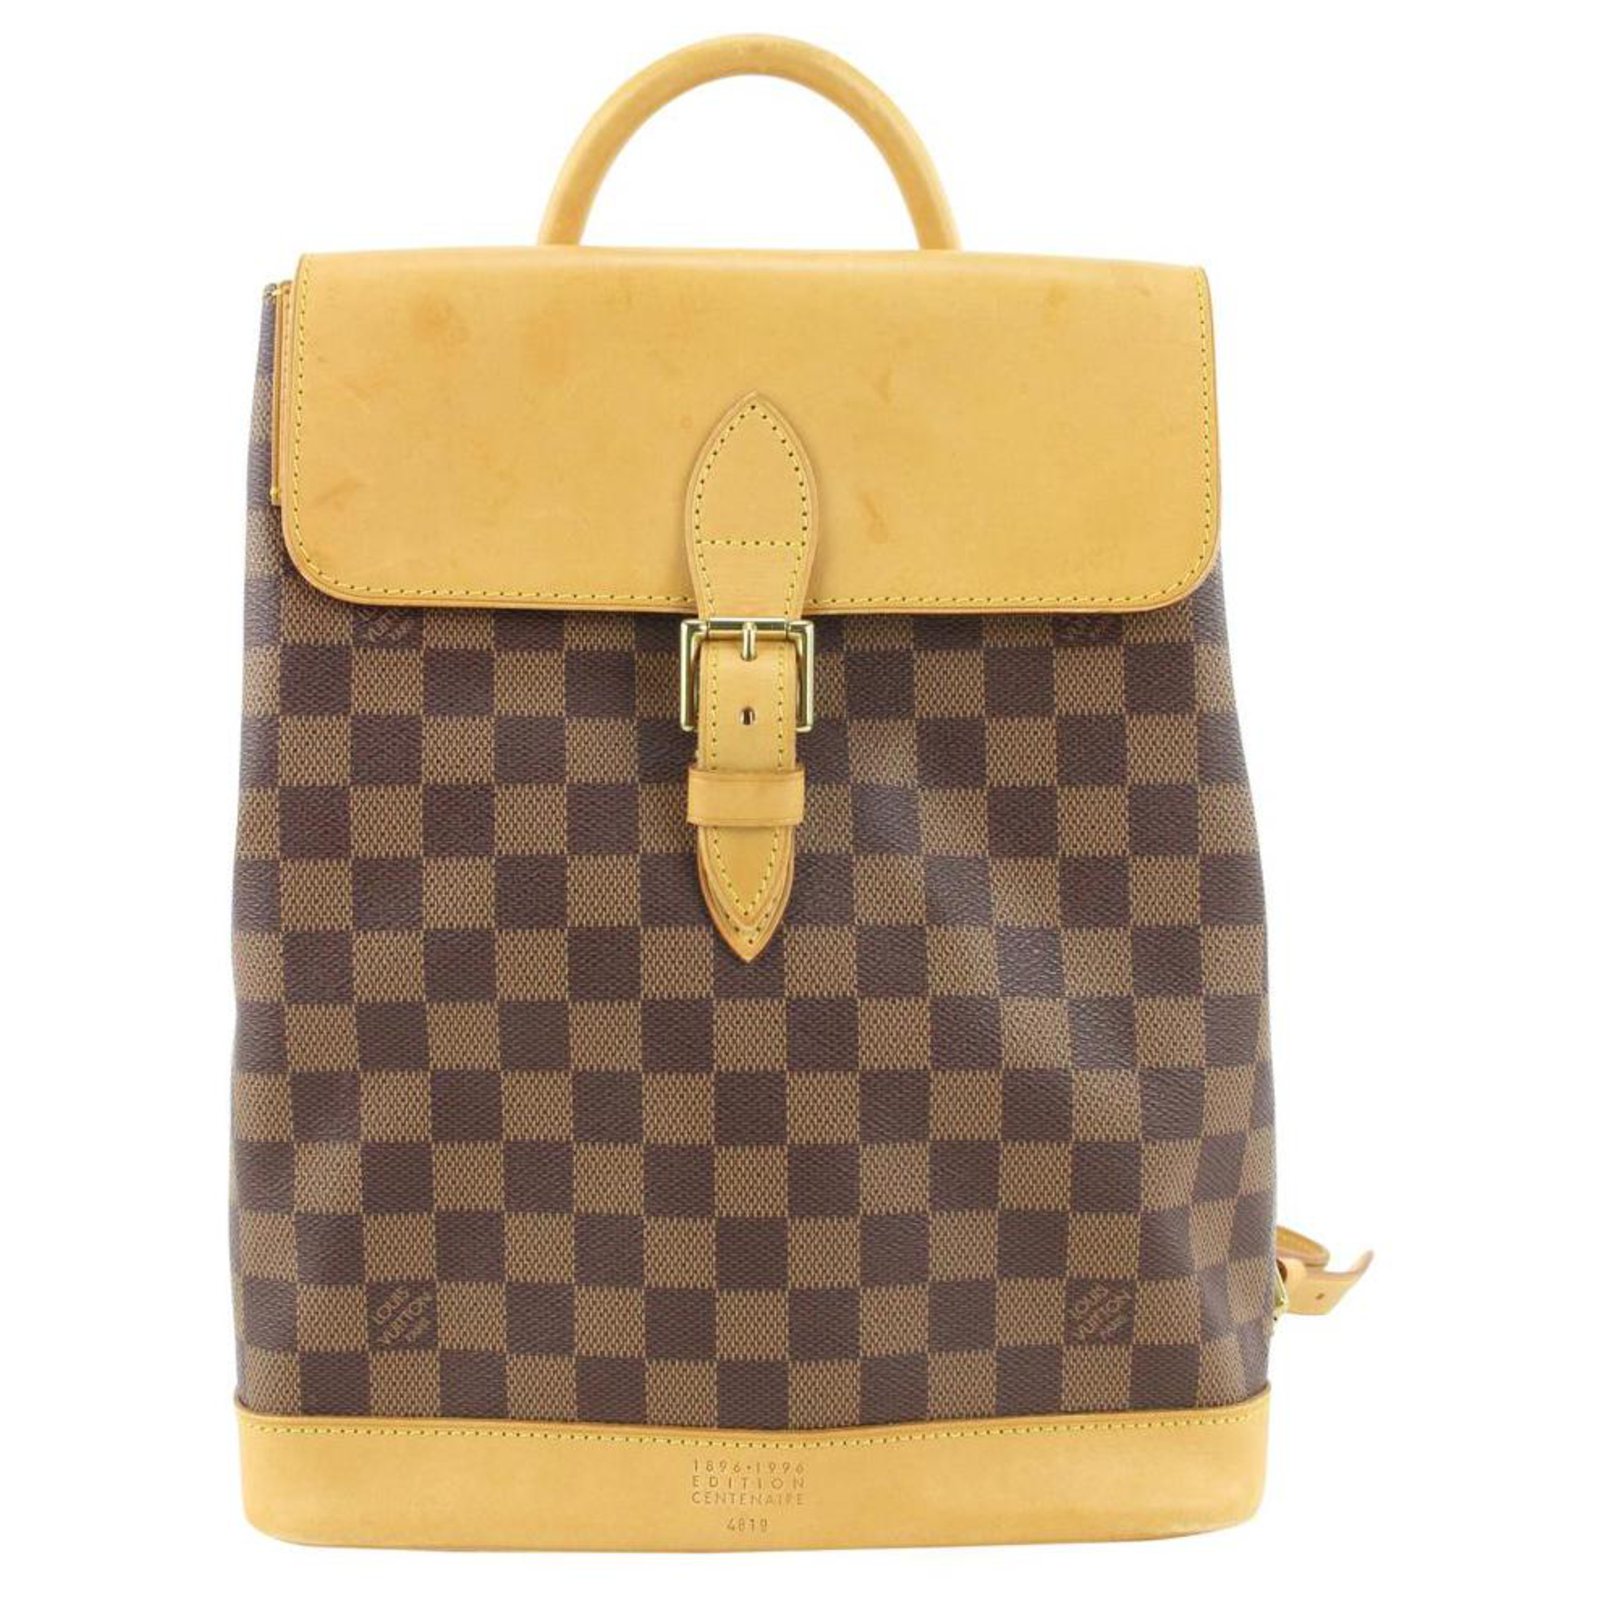 Shop Louis Vuitton MONOGRAM MACASSAR Dean backpack (M45335) by